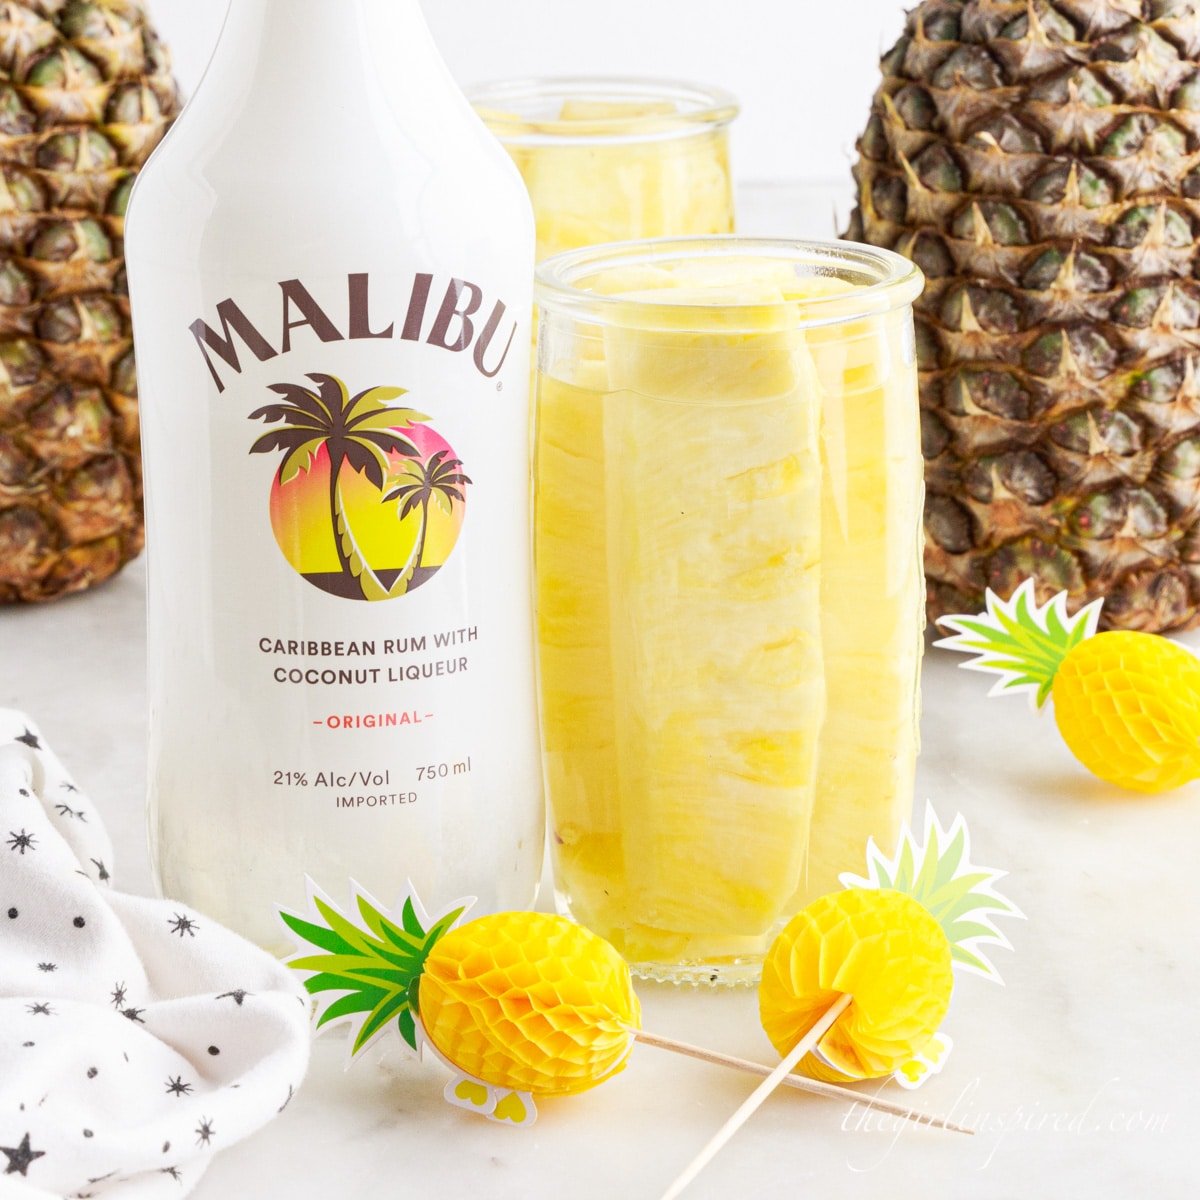 Boozy Pineapple Spears Soaked In Malibu